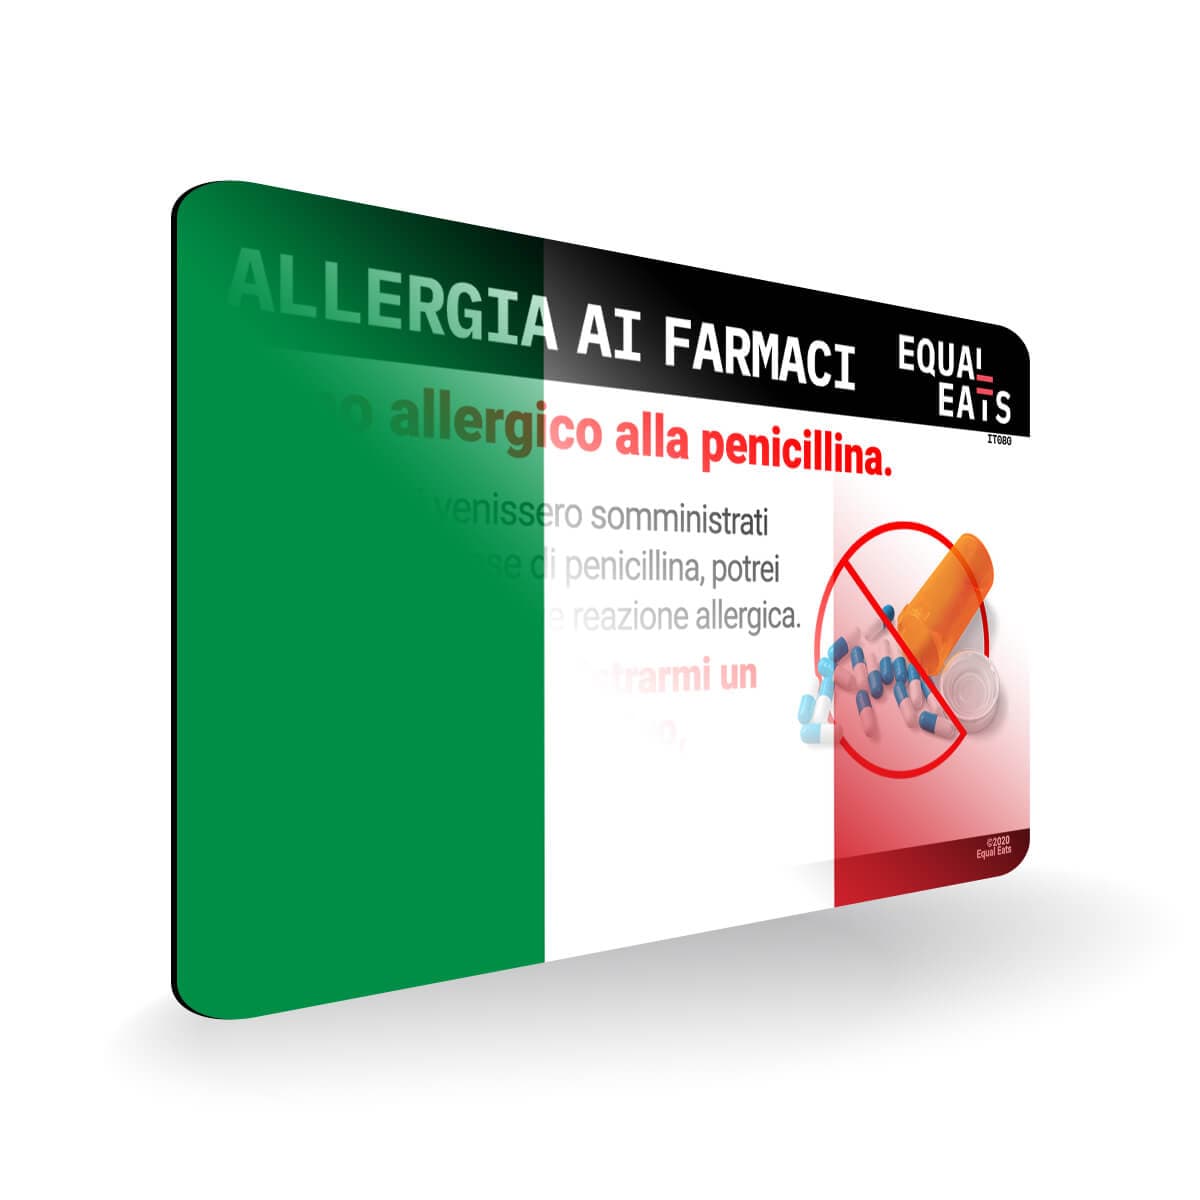 Penicillin Allergy in Italian. Penicillin medical ID Card for Italy